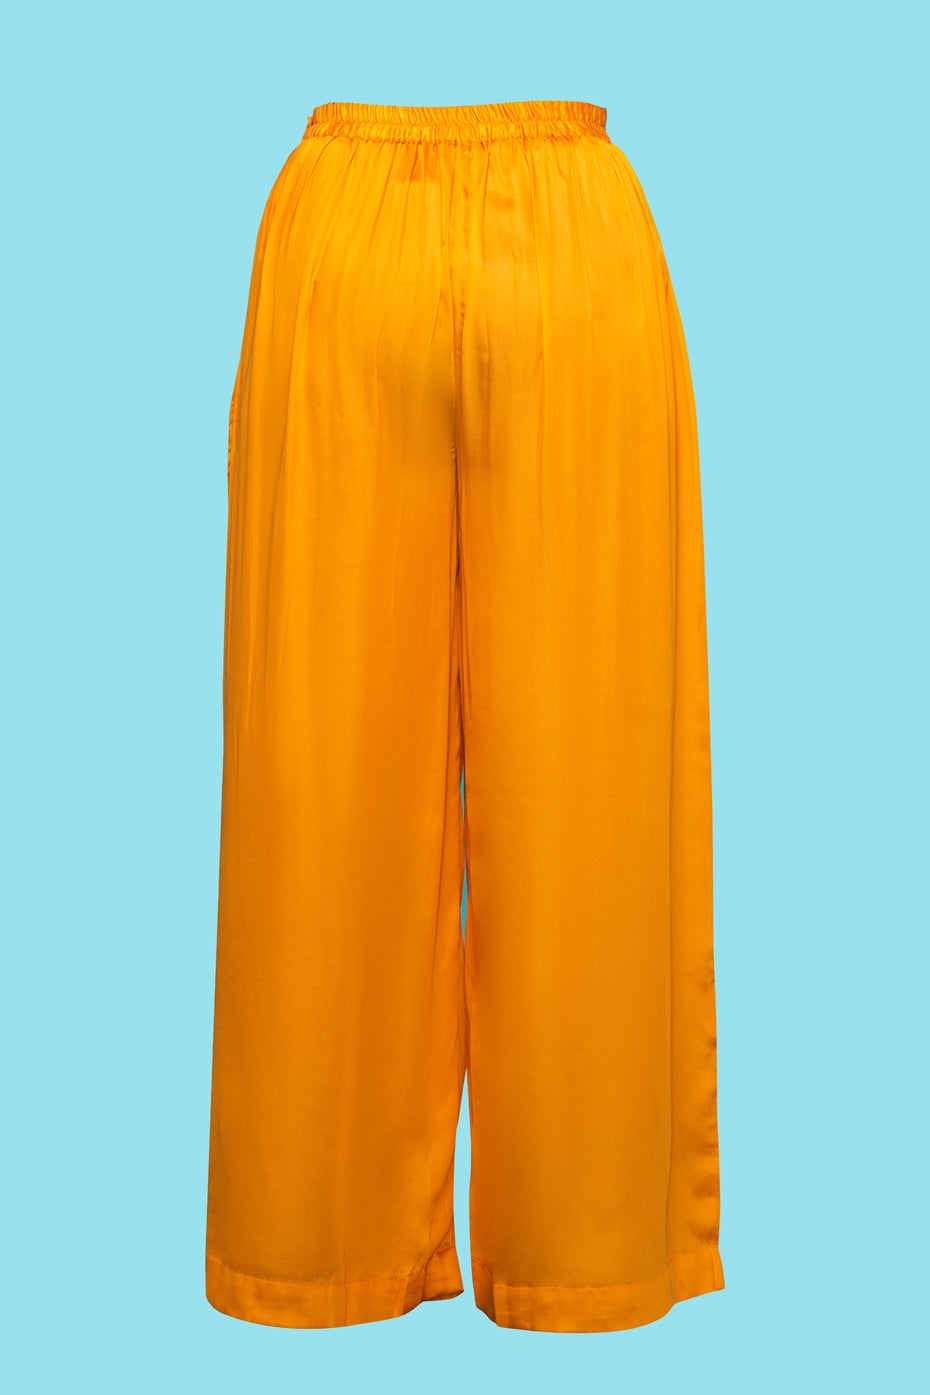 Orange High Waisted Pants